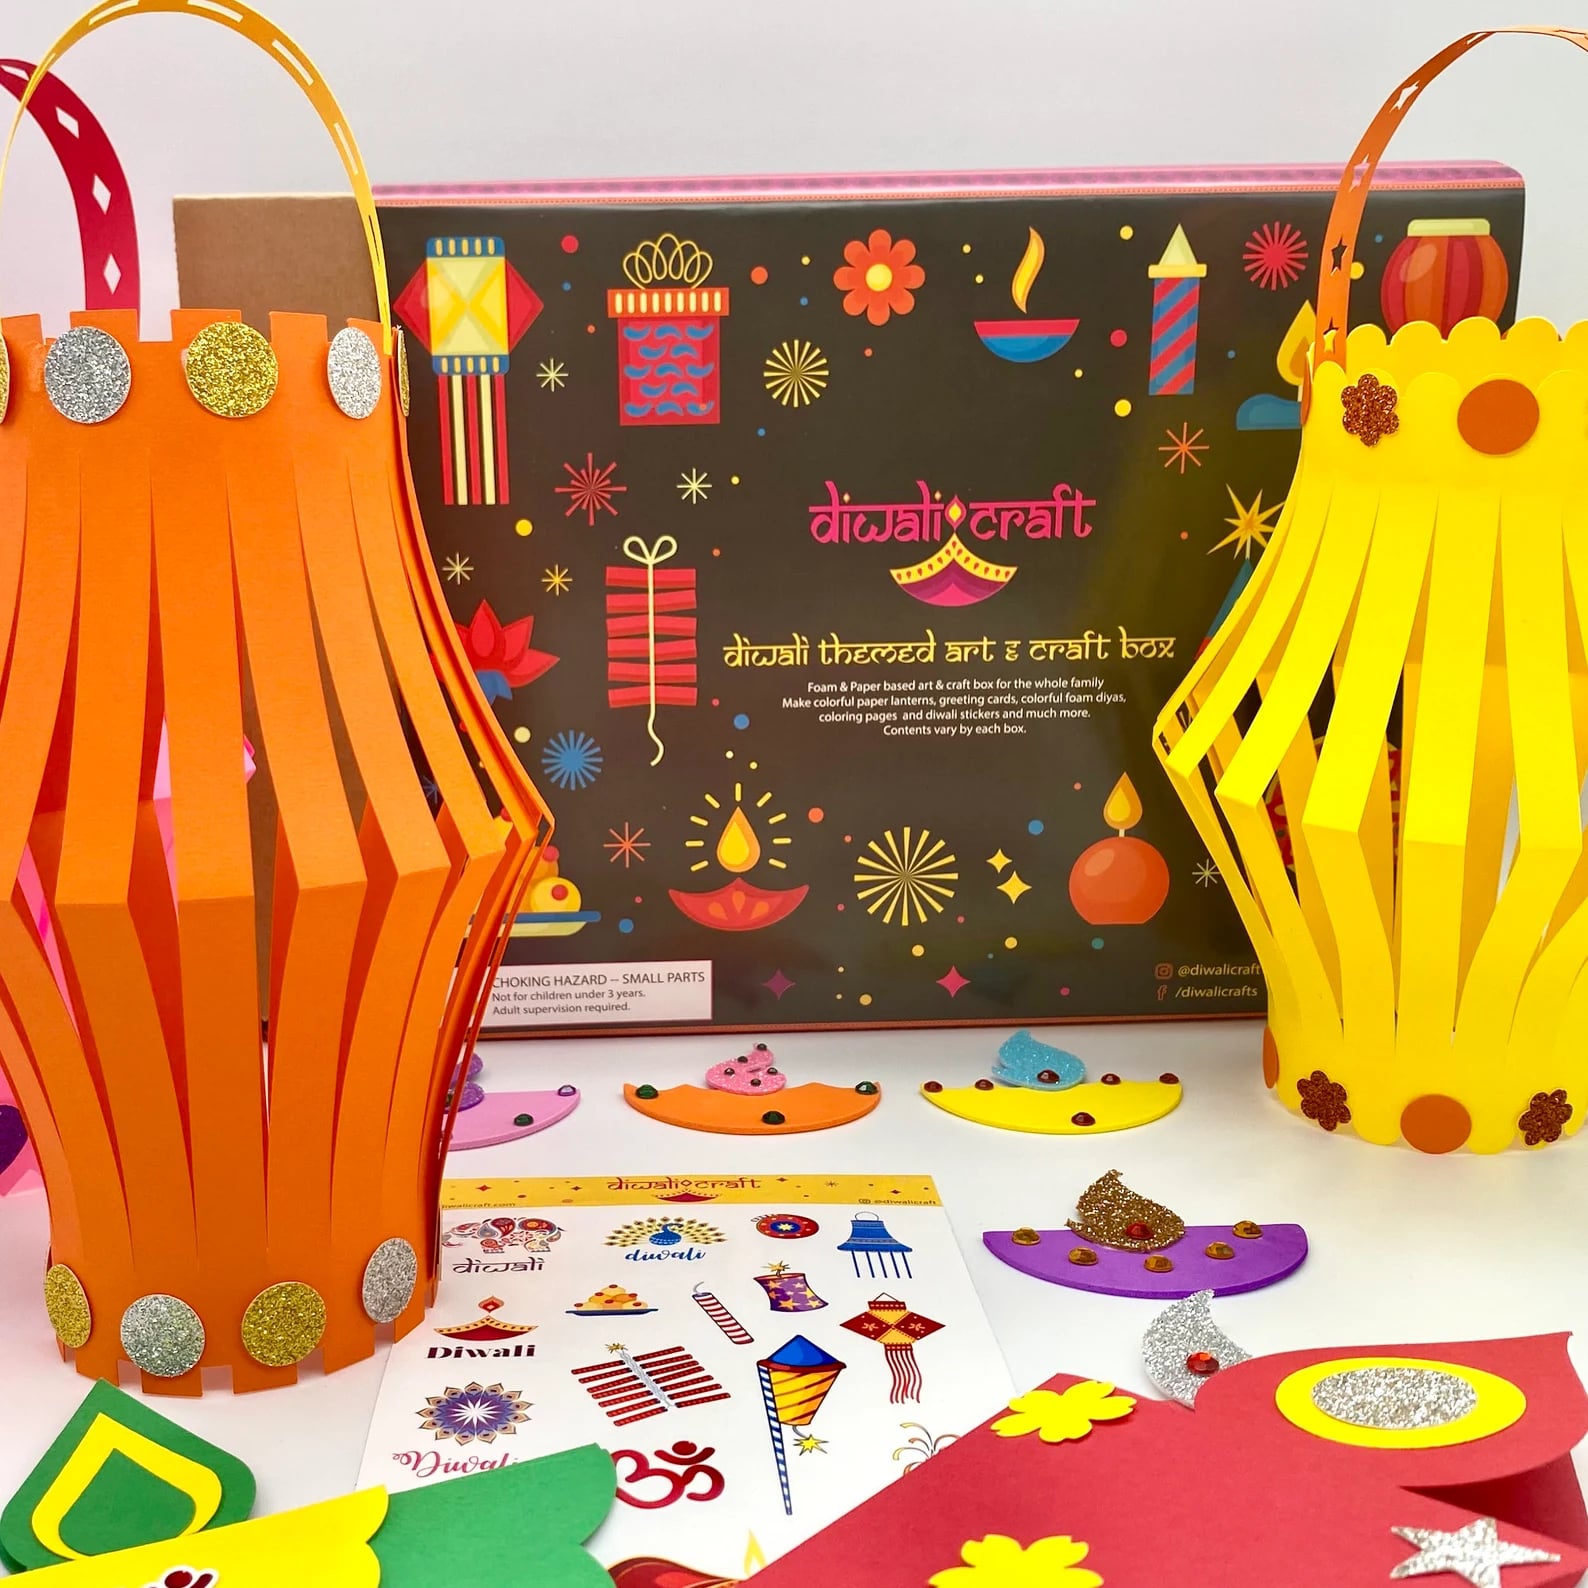 15 Easy DIY Diwali Gifts to Make Yourself | Diy diwali gifts, Diwali gifts,  Diwali diy